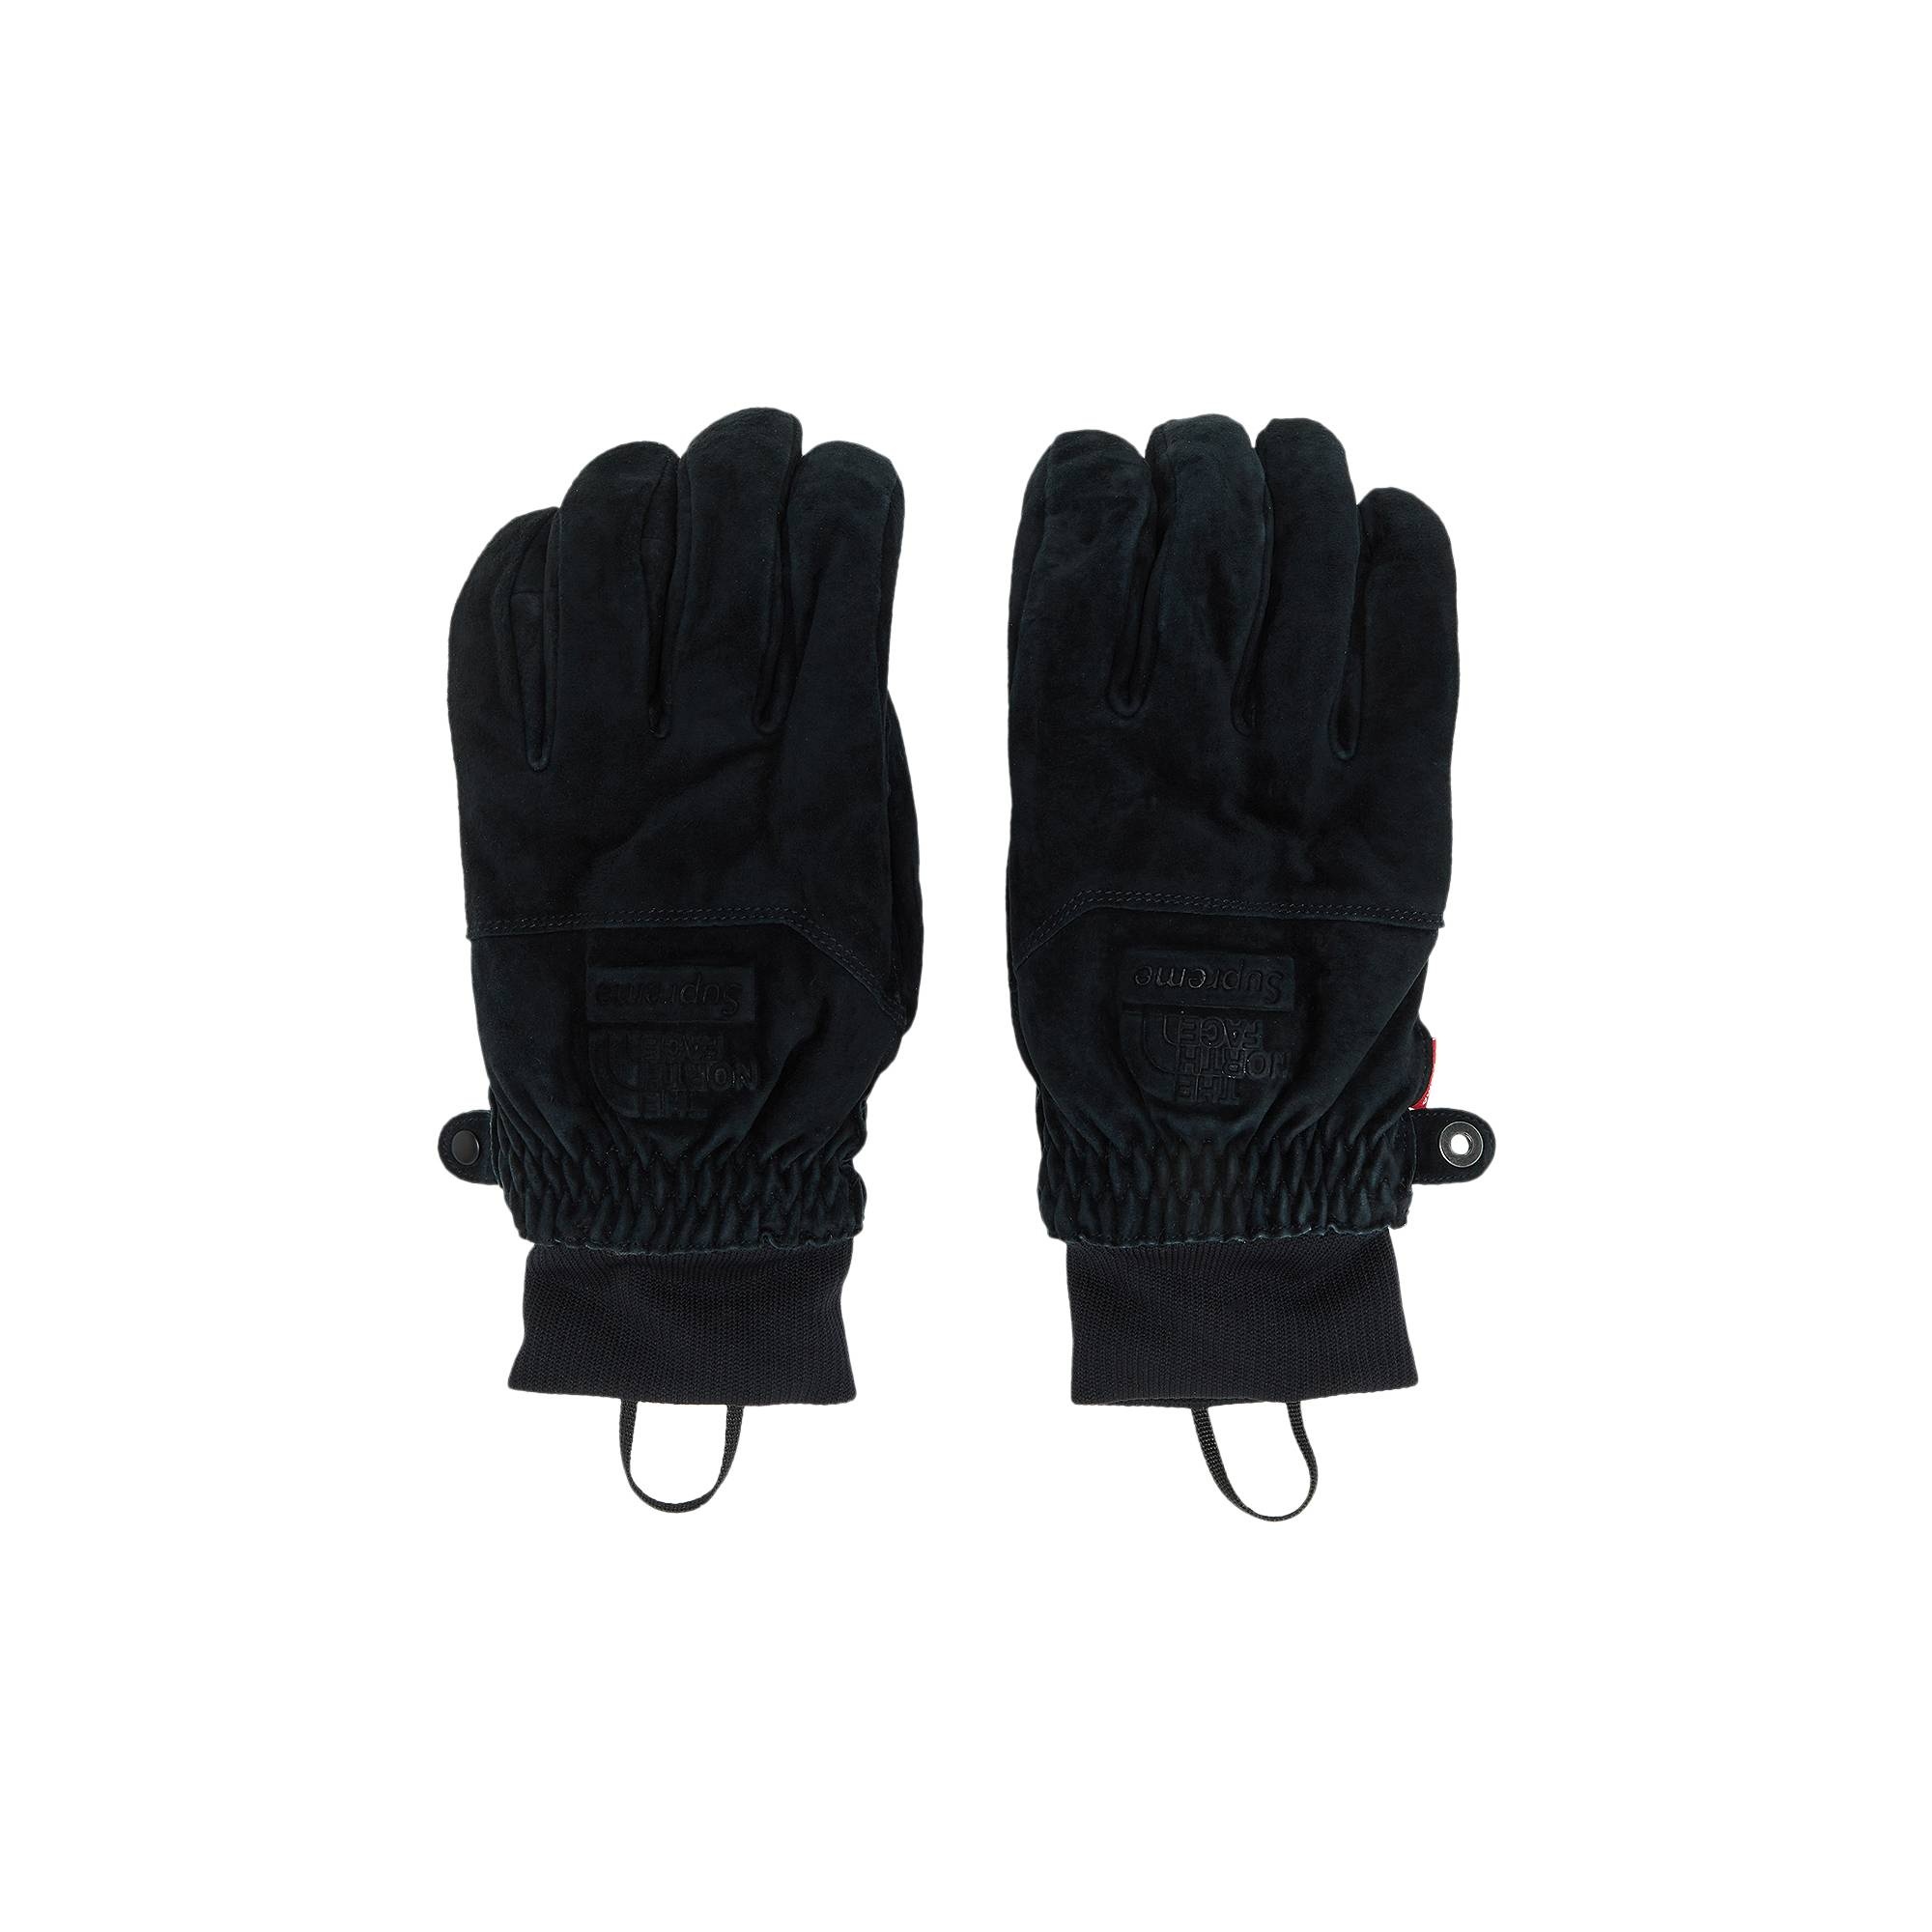 Supreme x The North Face Suede Glove 'Black' - 1